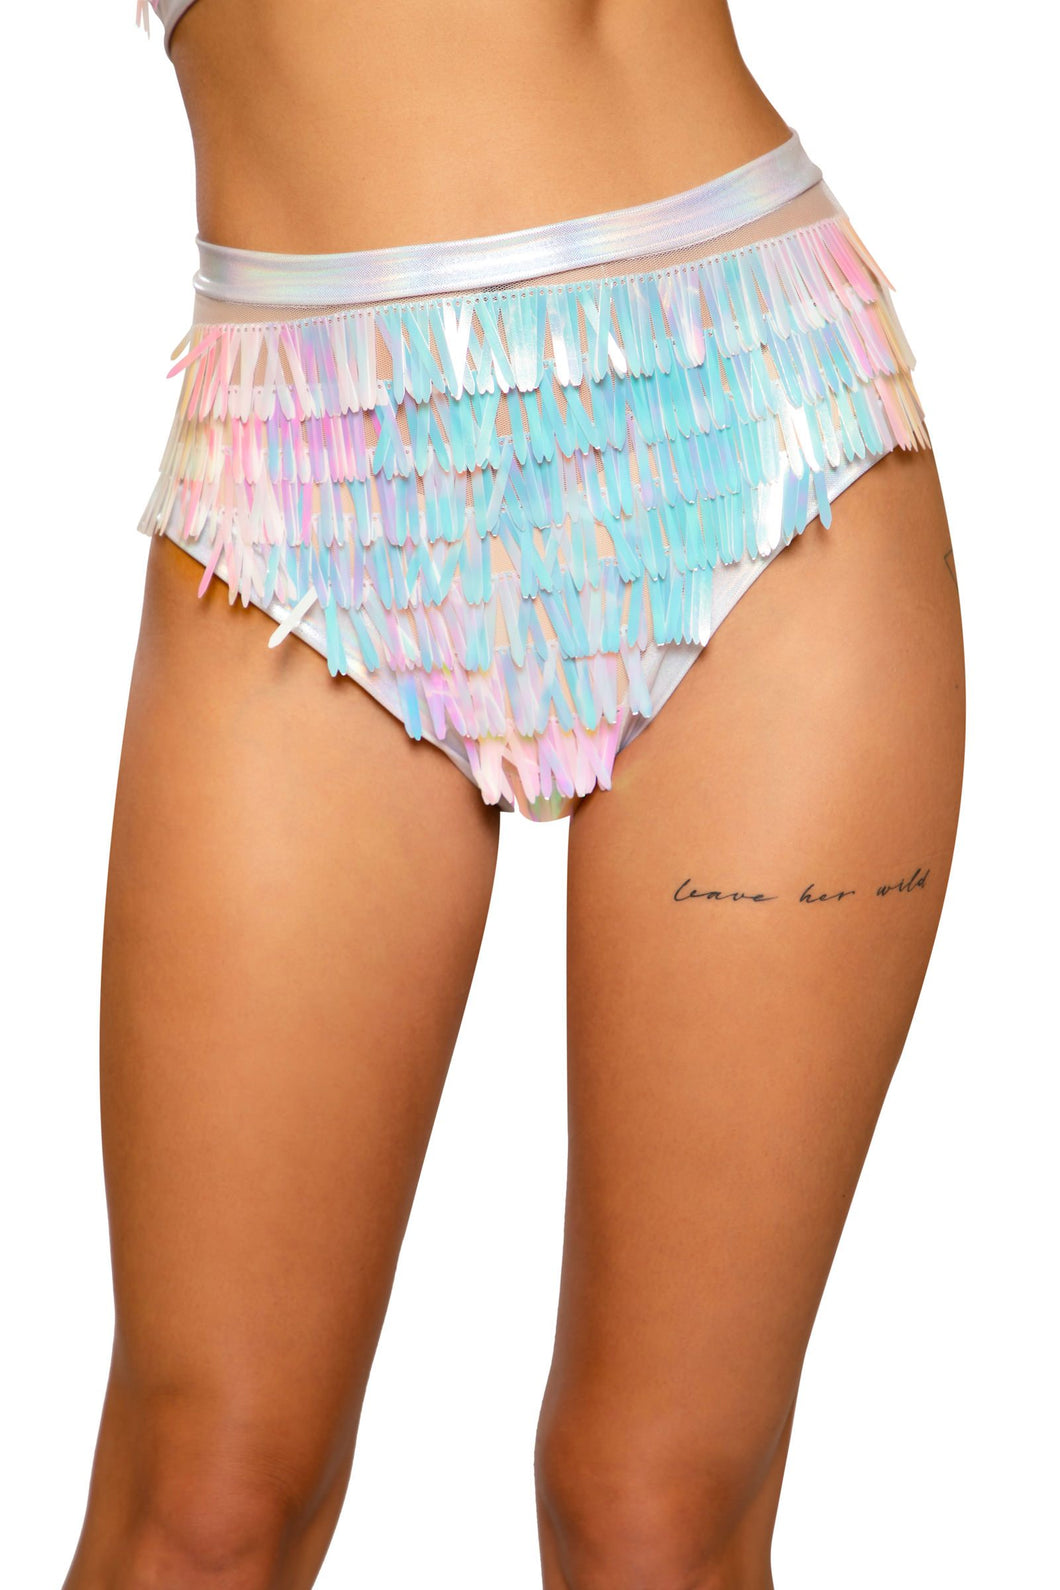 3718 - Raindrop Sequin & Shimmer High-Waisted Shorts